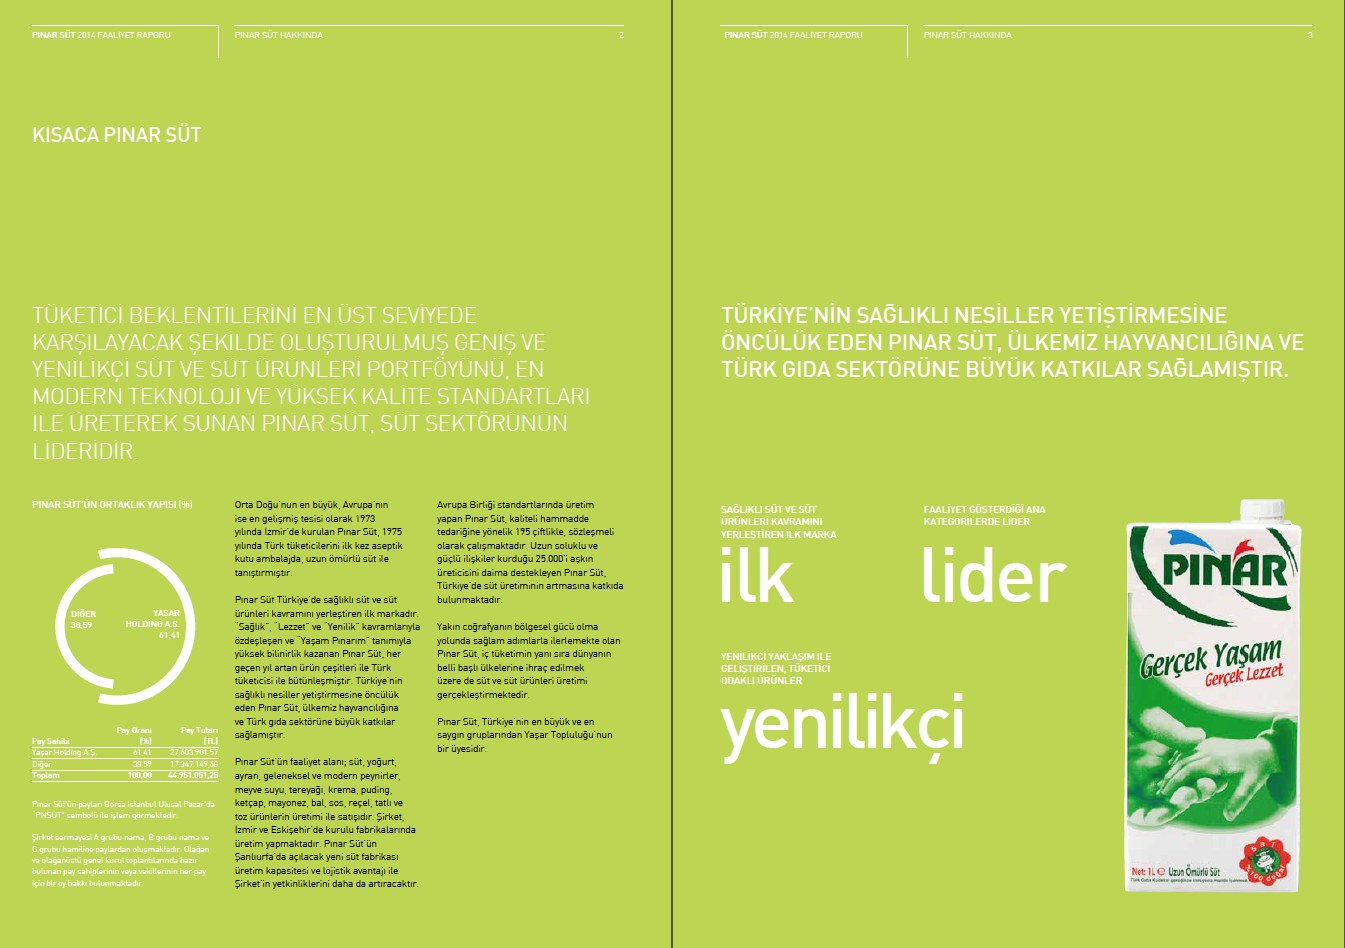 PINAR SÜT / 2014 Faaliyet Raporu / 2014 Annual Report